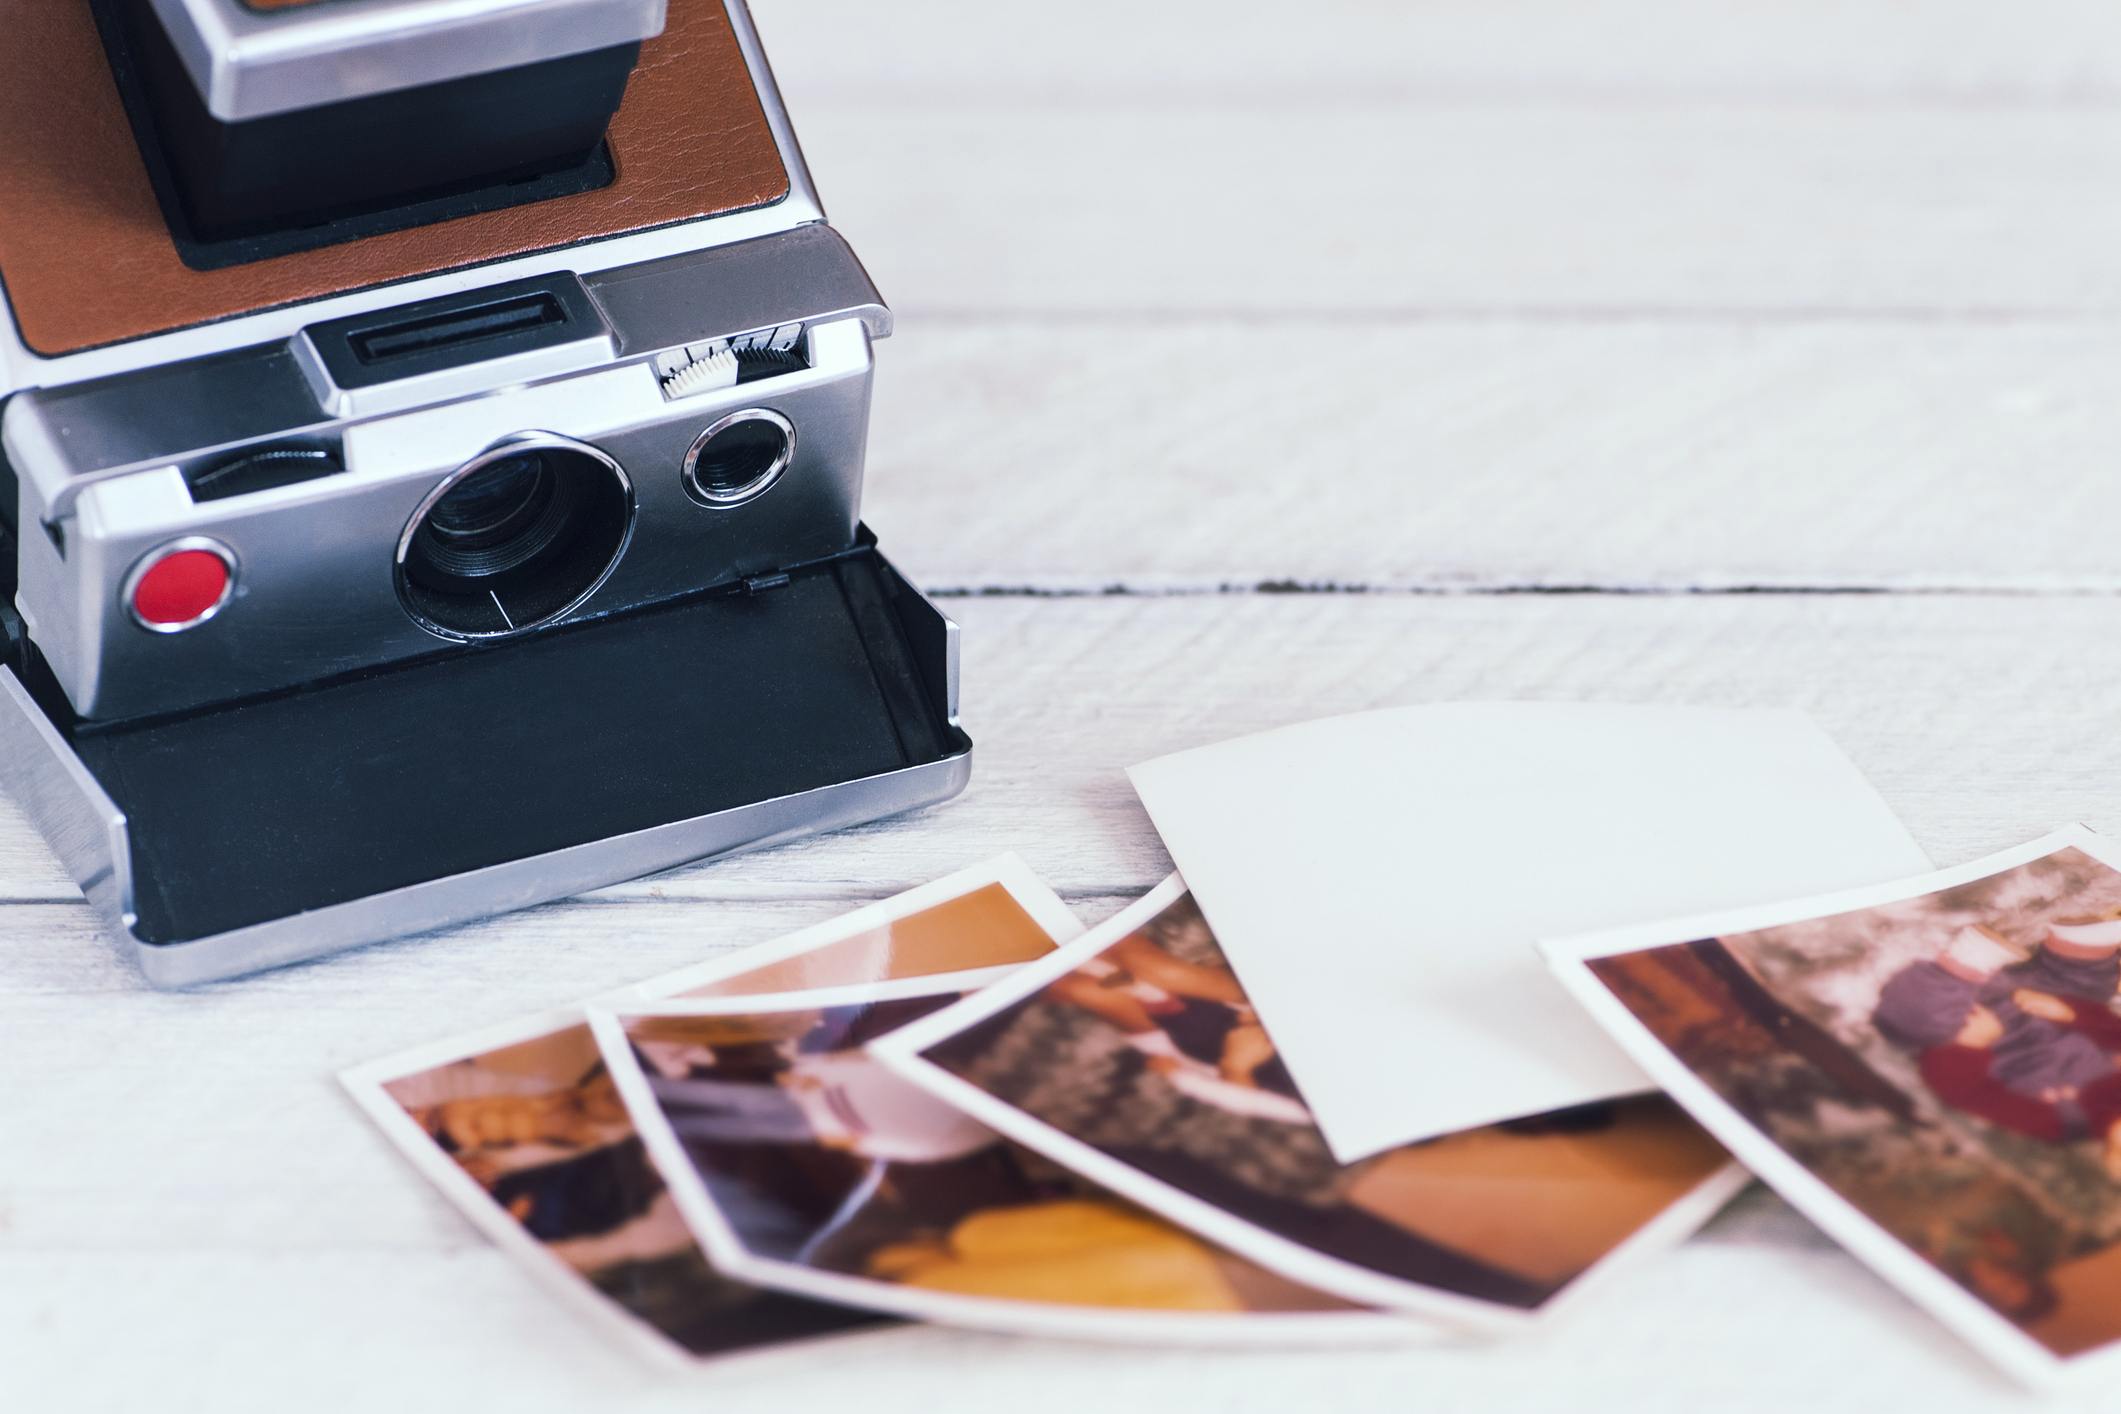 Polaroid camera with photos